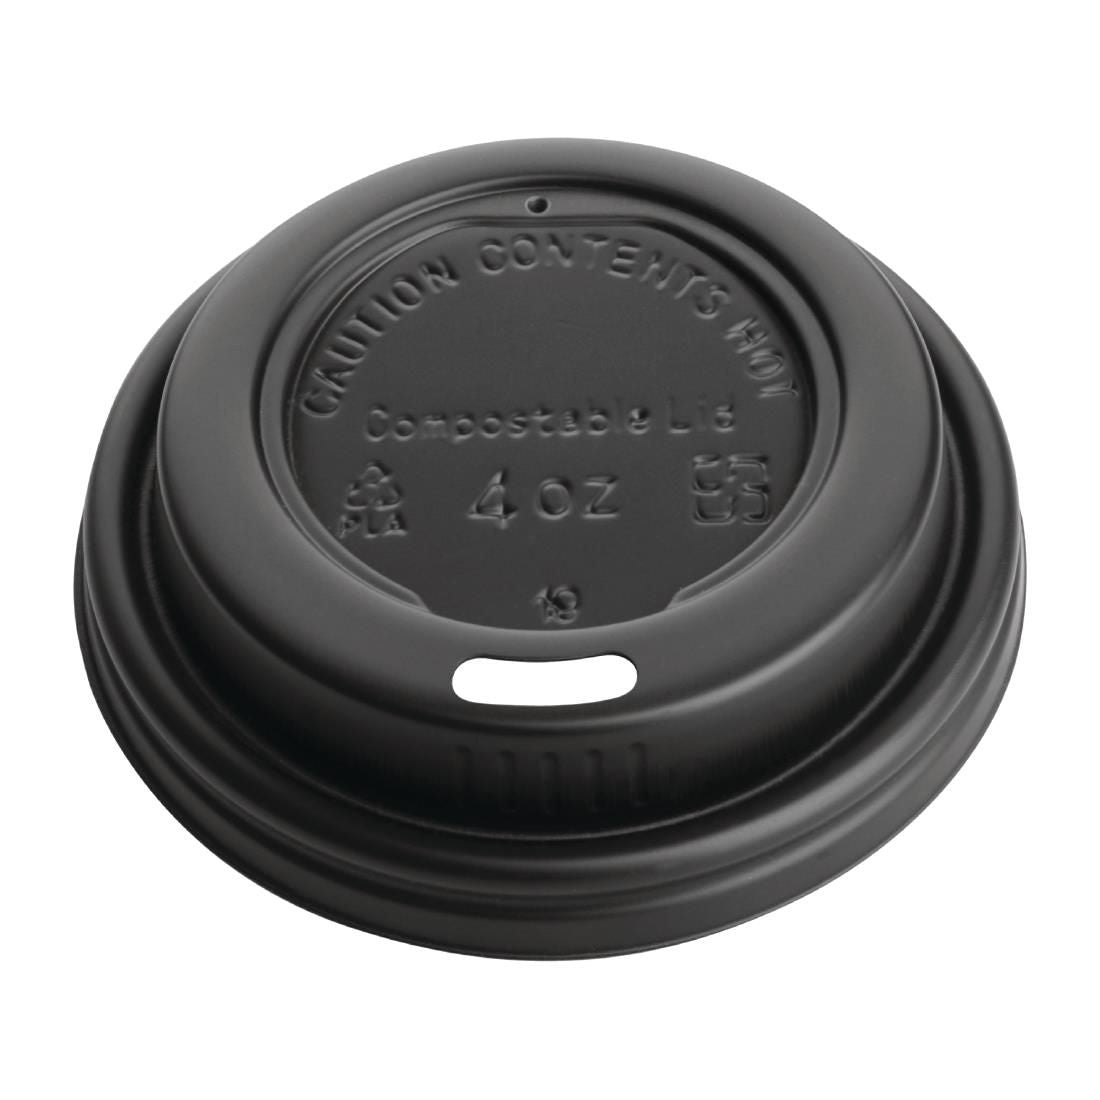 Fiesta Green Compostable Espresso Cup Lids 113ml / 4oz JD Catering Equipment Solutions Ltd